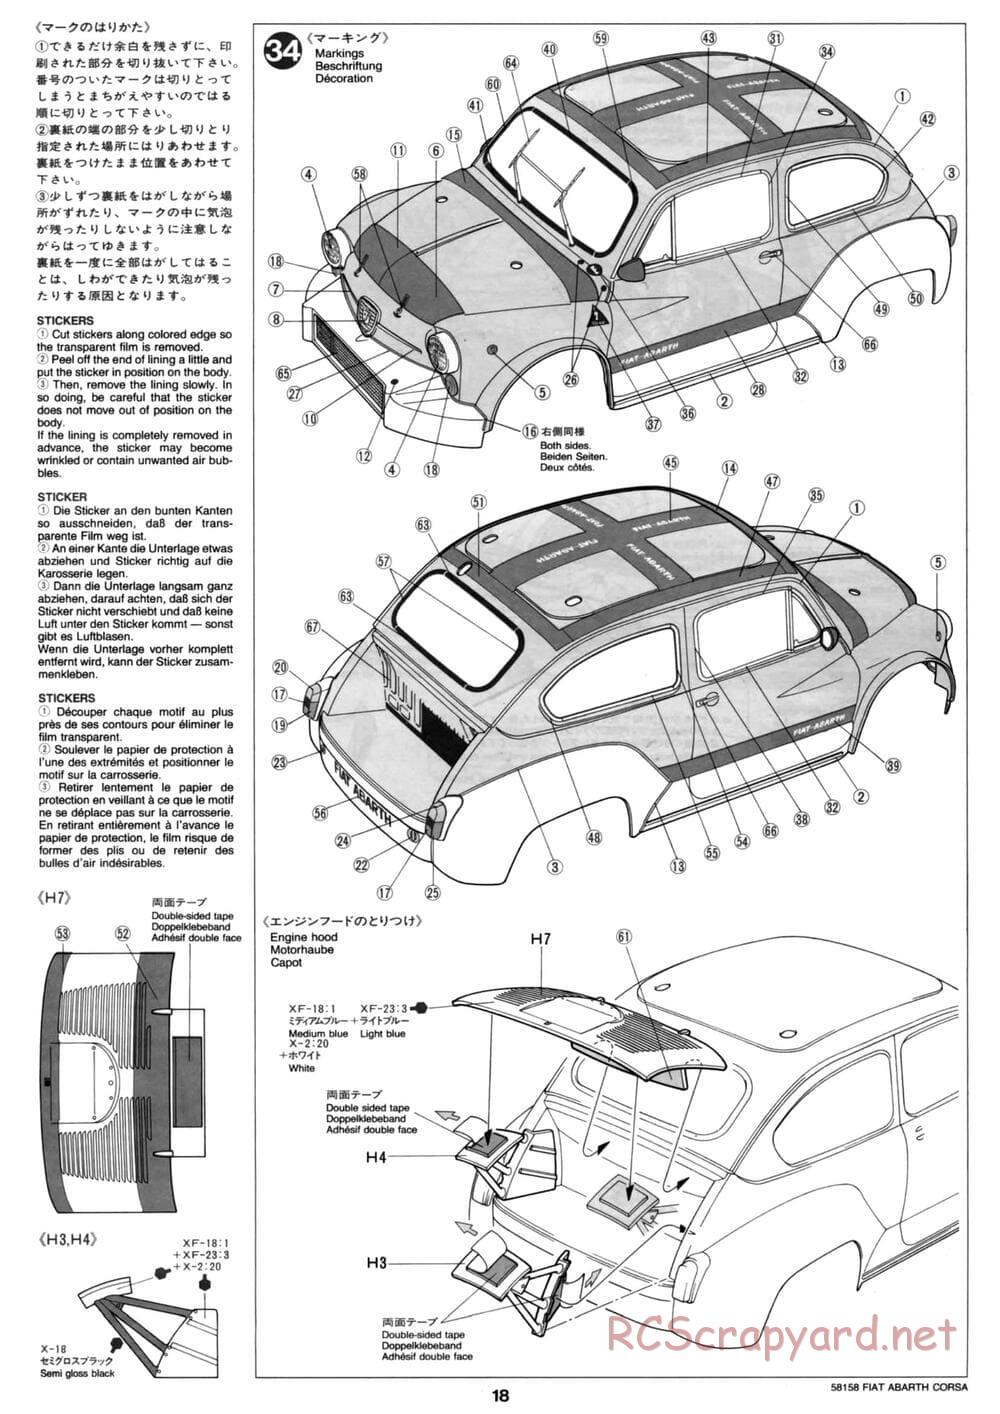 Tamiya - Fiat Abarth 1000 TCR Berlina Corse - M02 Chassis - Manual - Page 18